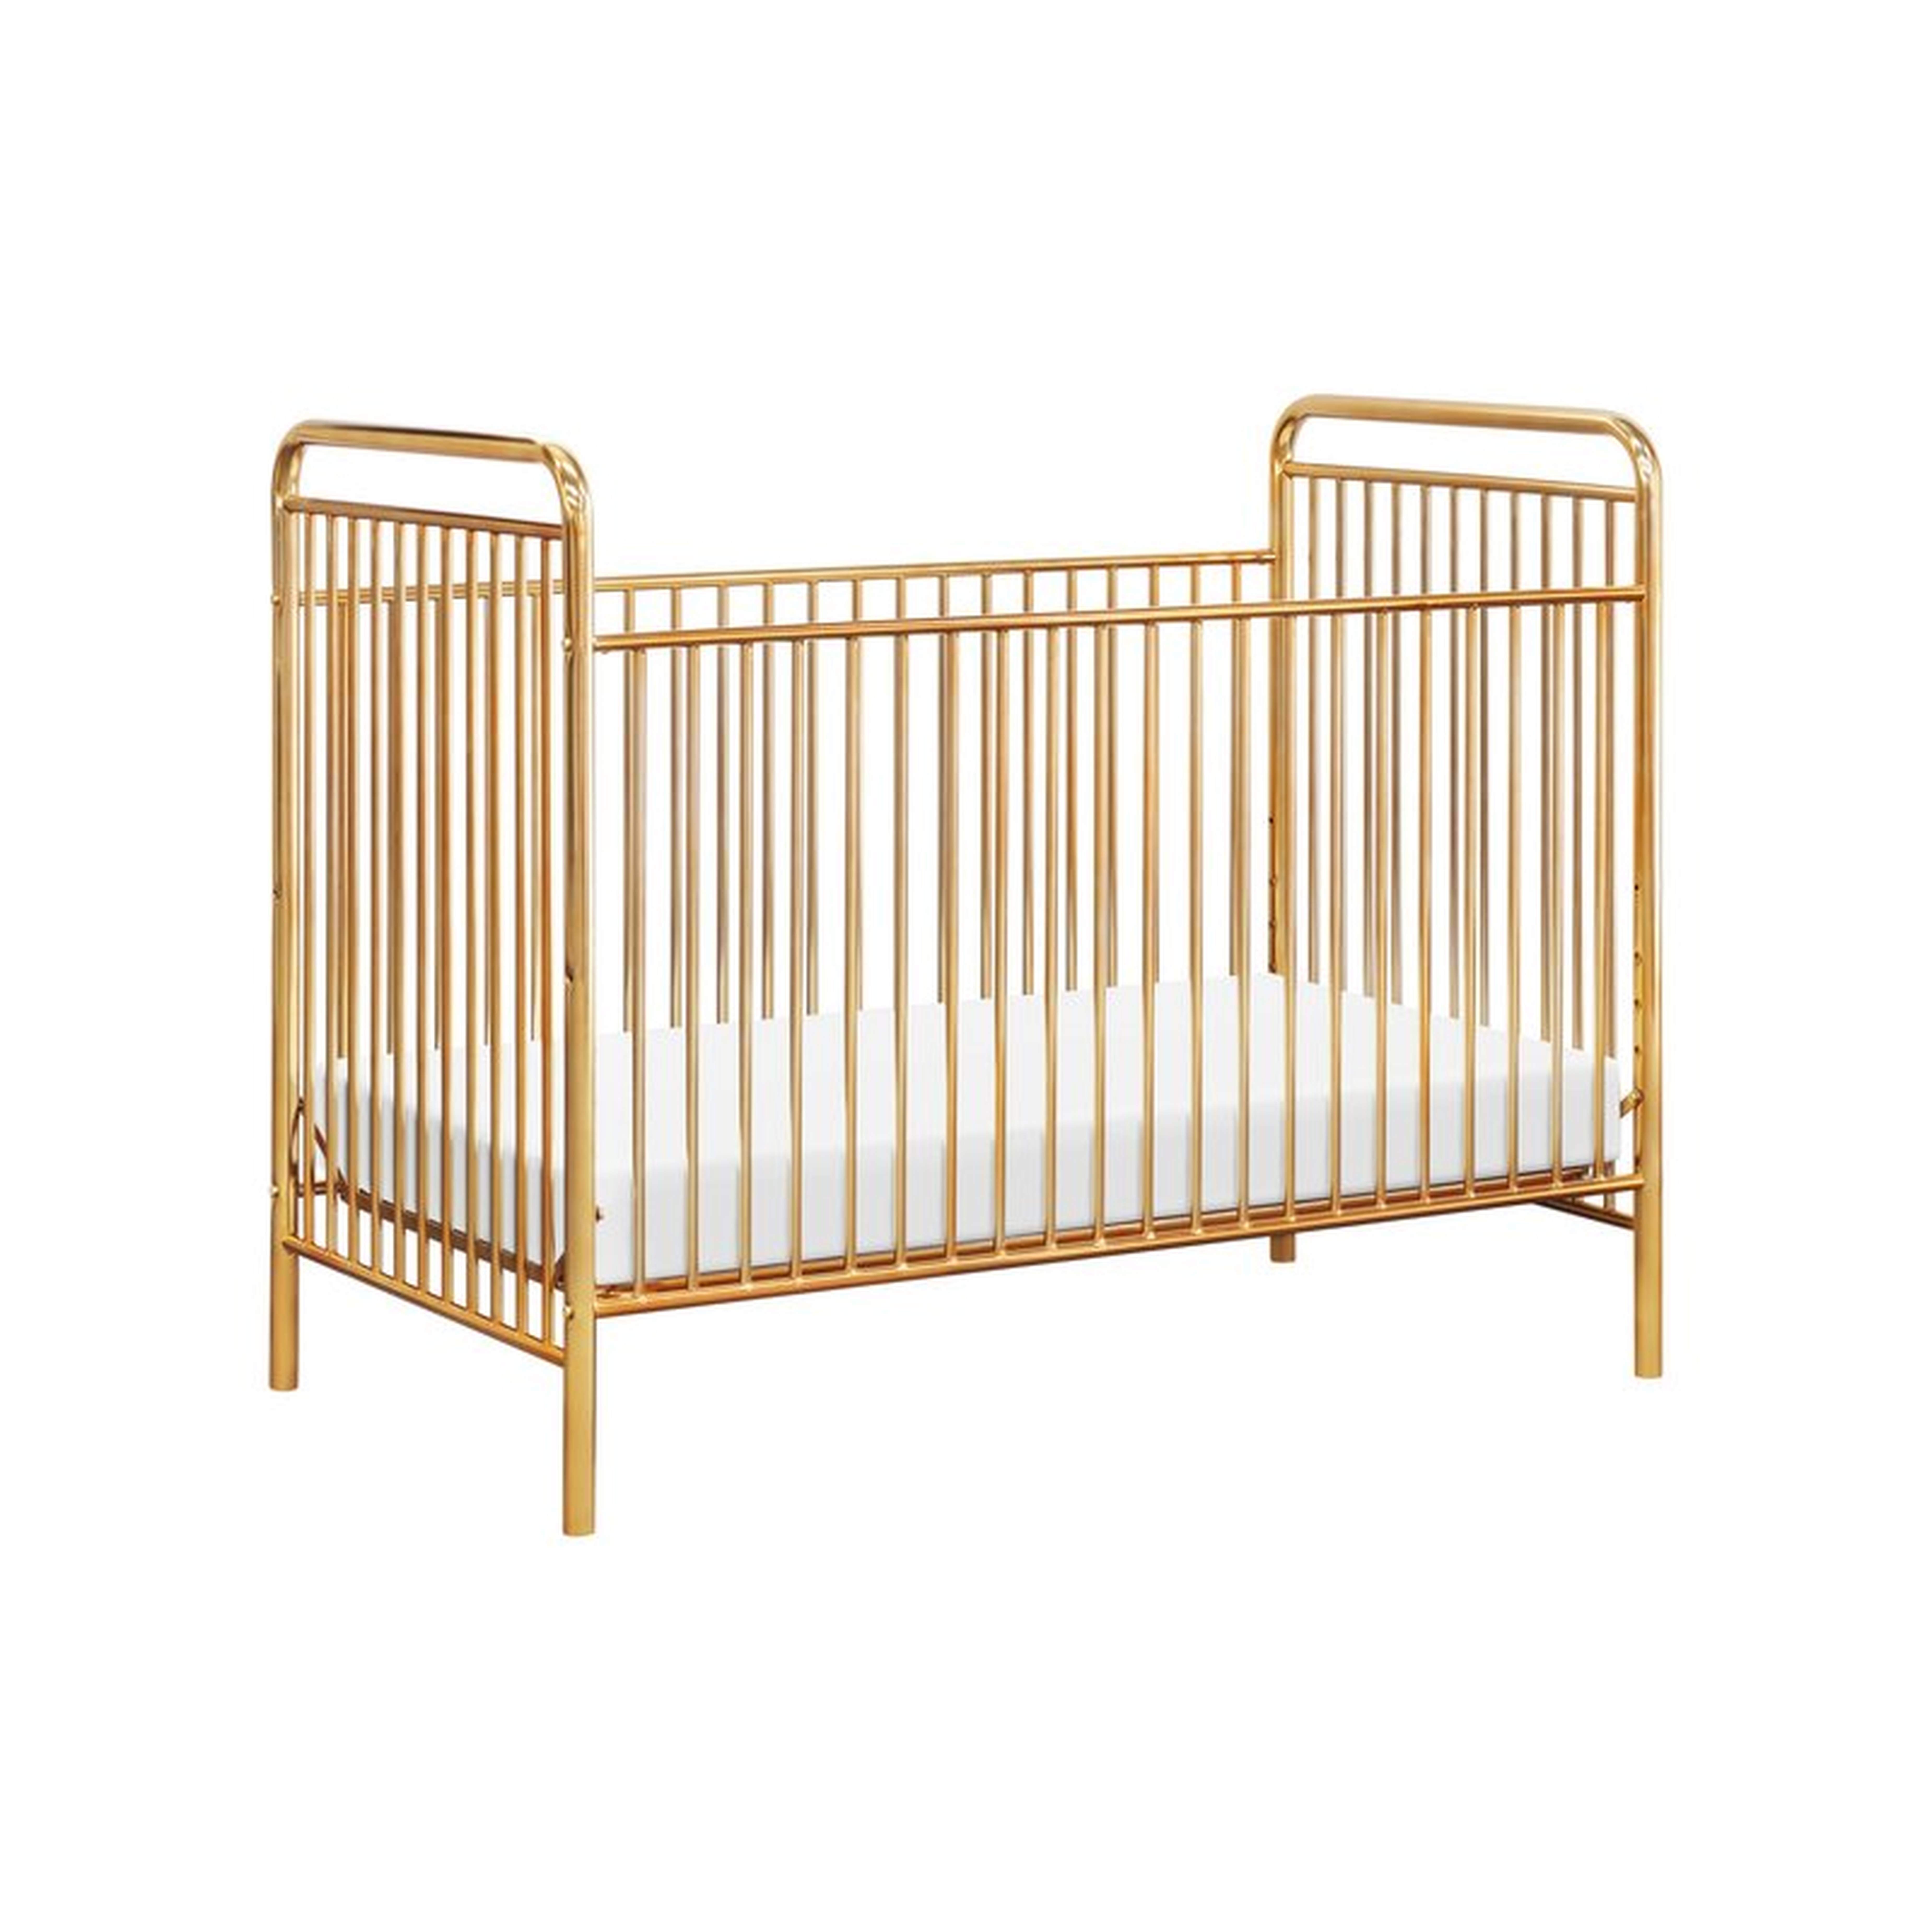 Jubilee Metal 3-in-1 Convertible Crib Color: Gold - Perigold